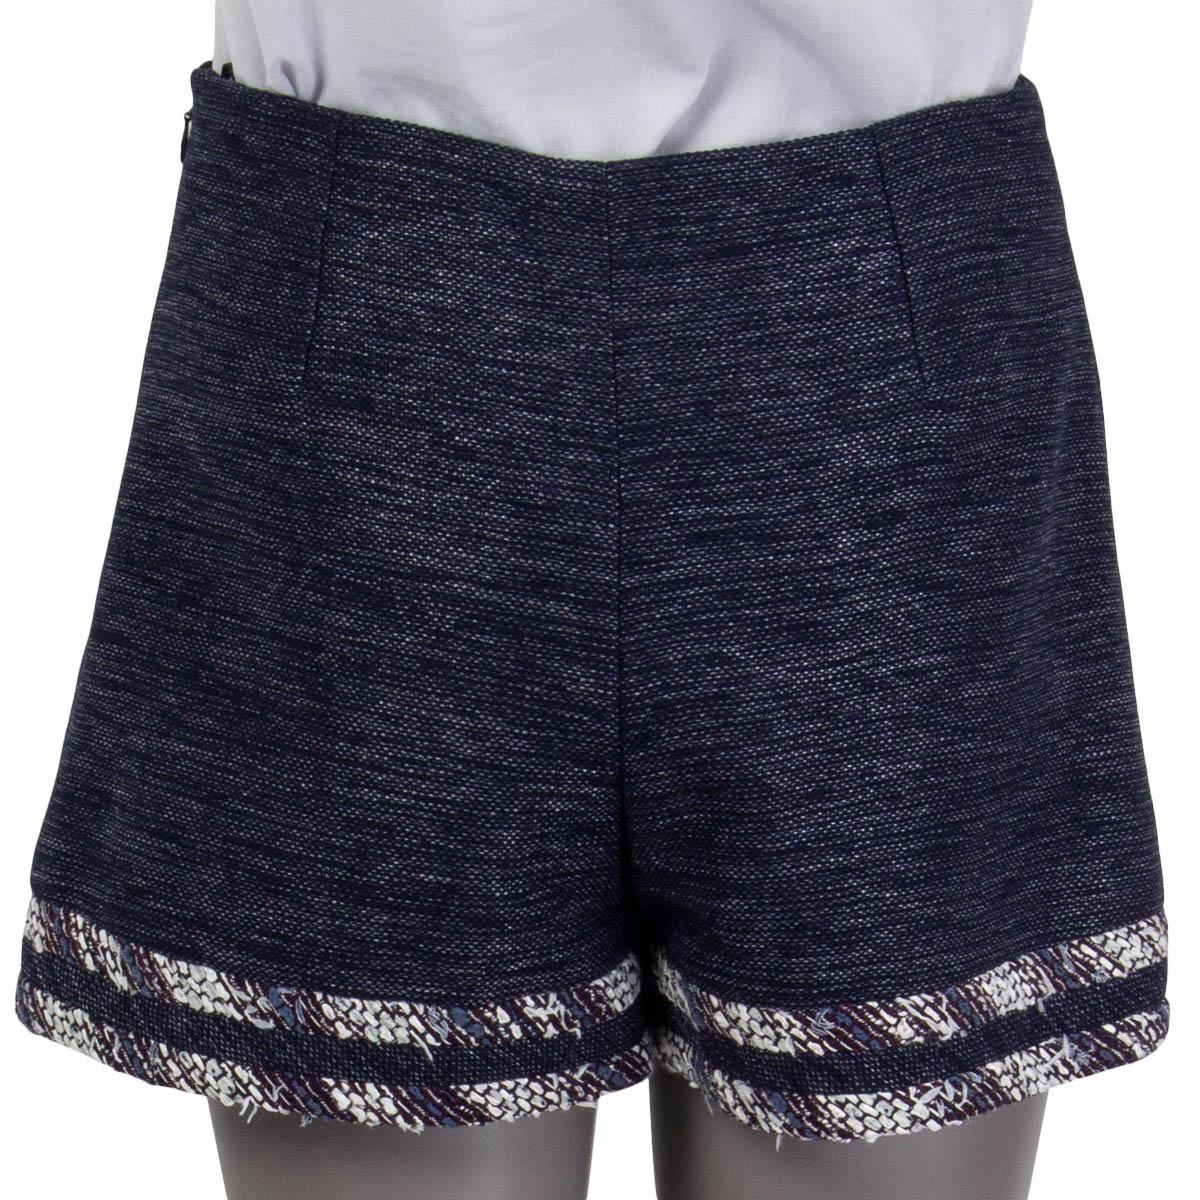 CHANEL Rauchlila Baumwolle 2013 TWEED Shorts Hose 38 S im Angebot 1